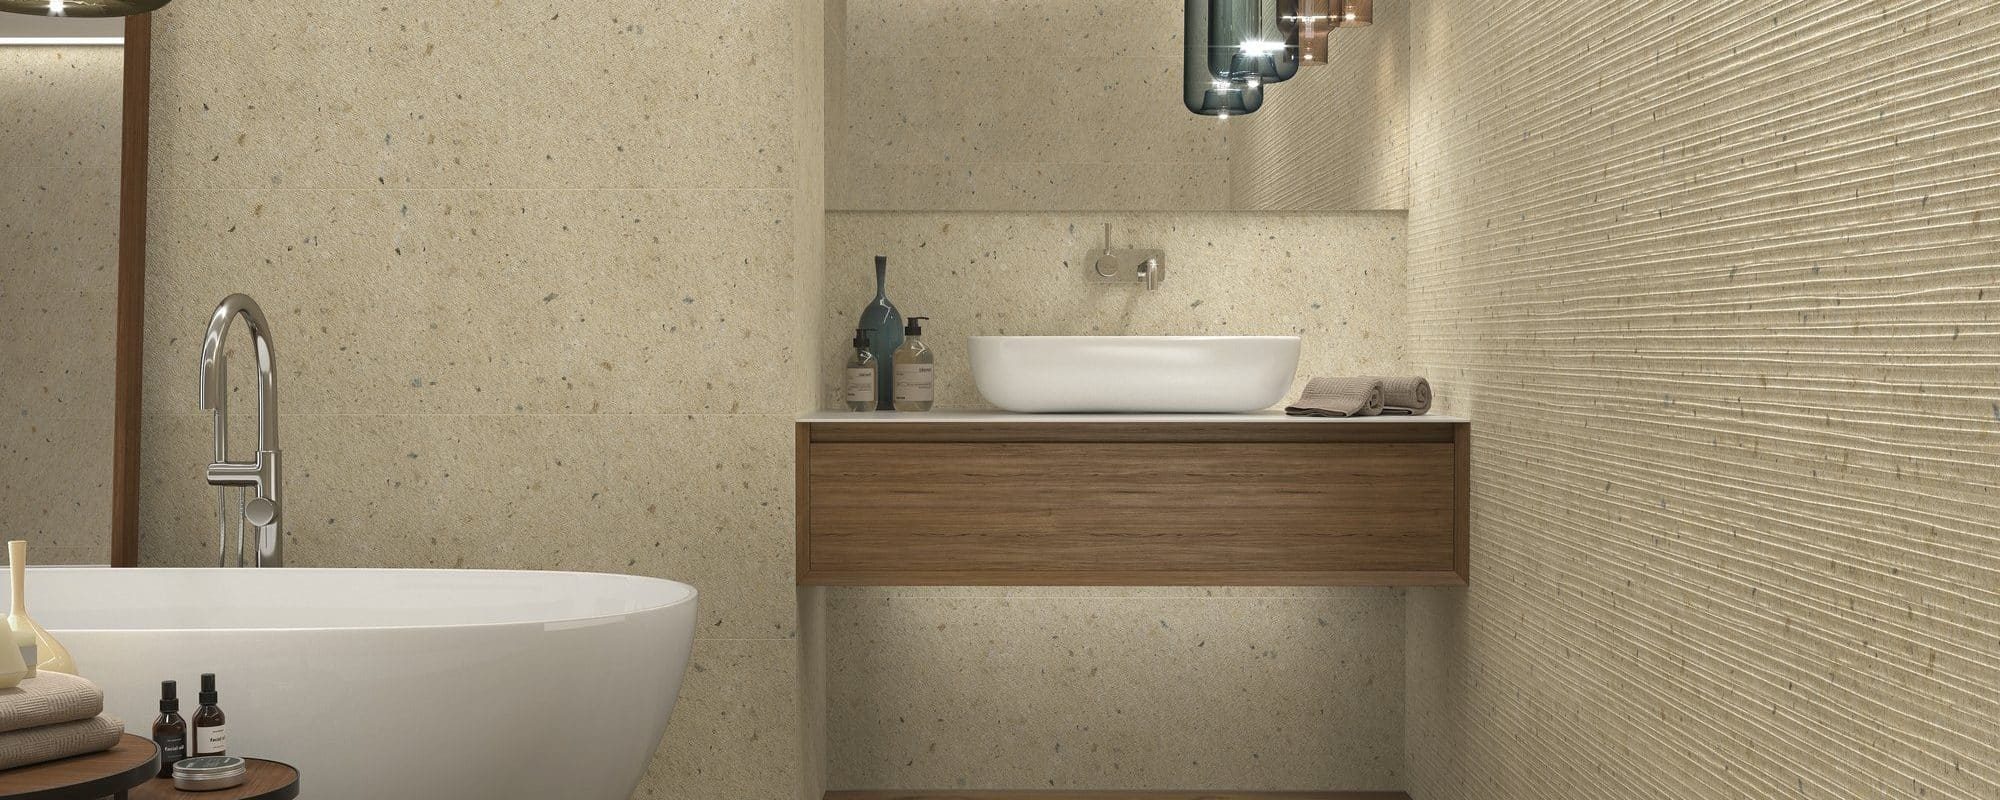 RE-USE-Effect Wall & Floor Tiles for Bathrooms uk slider london